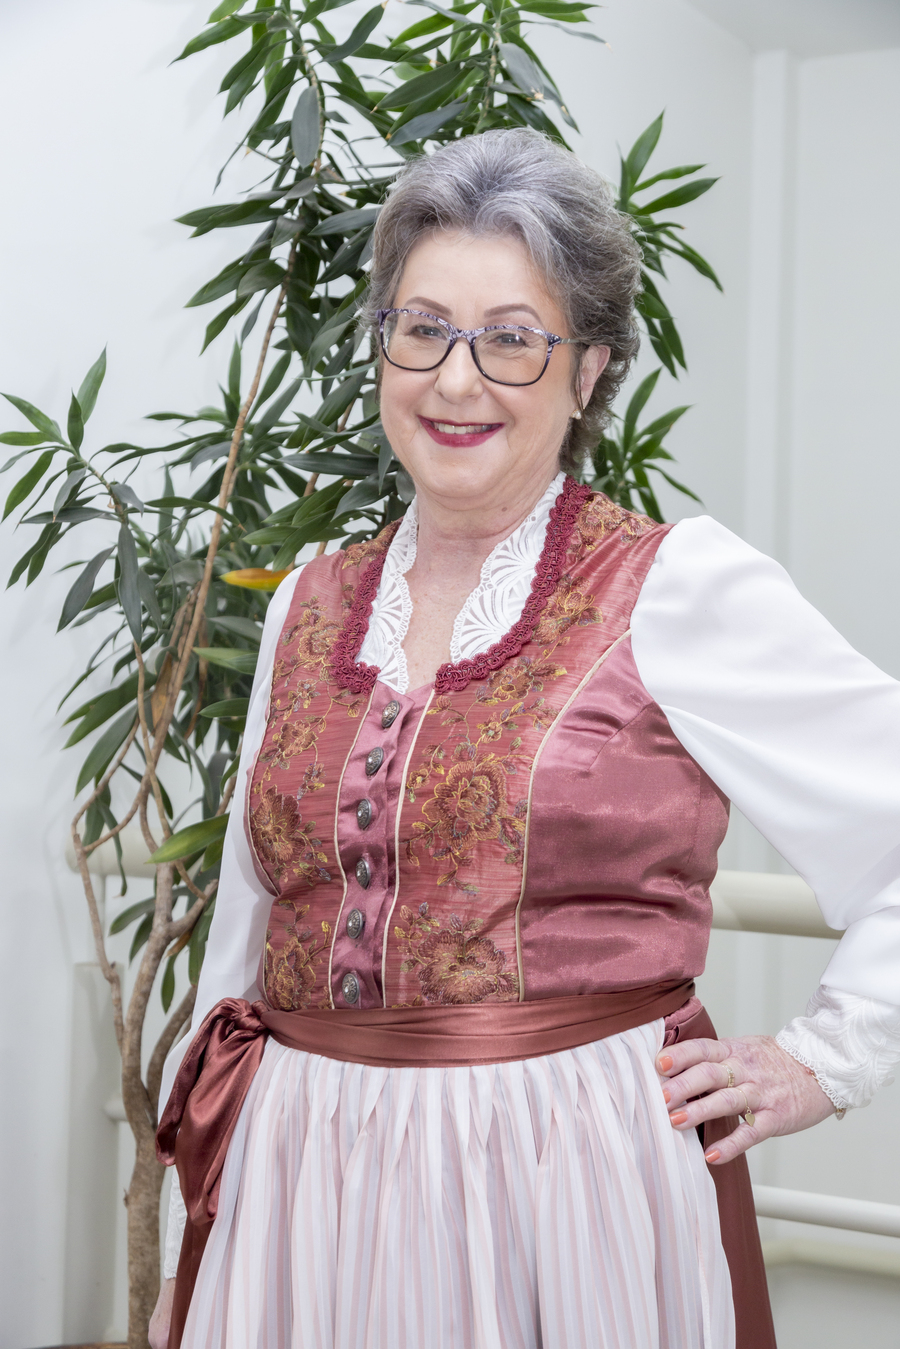 Seniorin da Oktoberfest de Igrejinha apresenta traje oficial